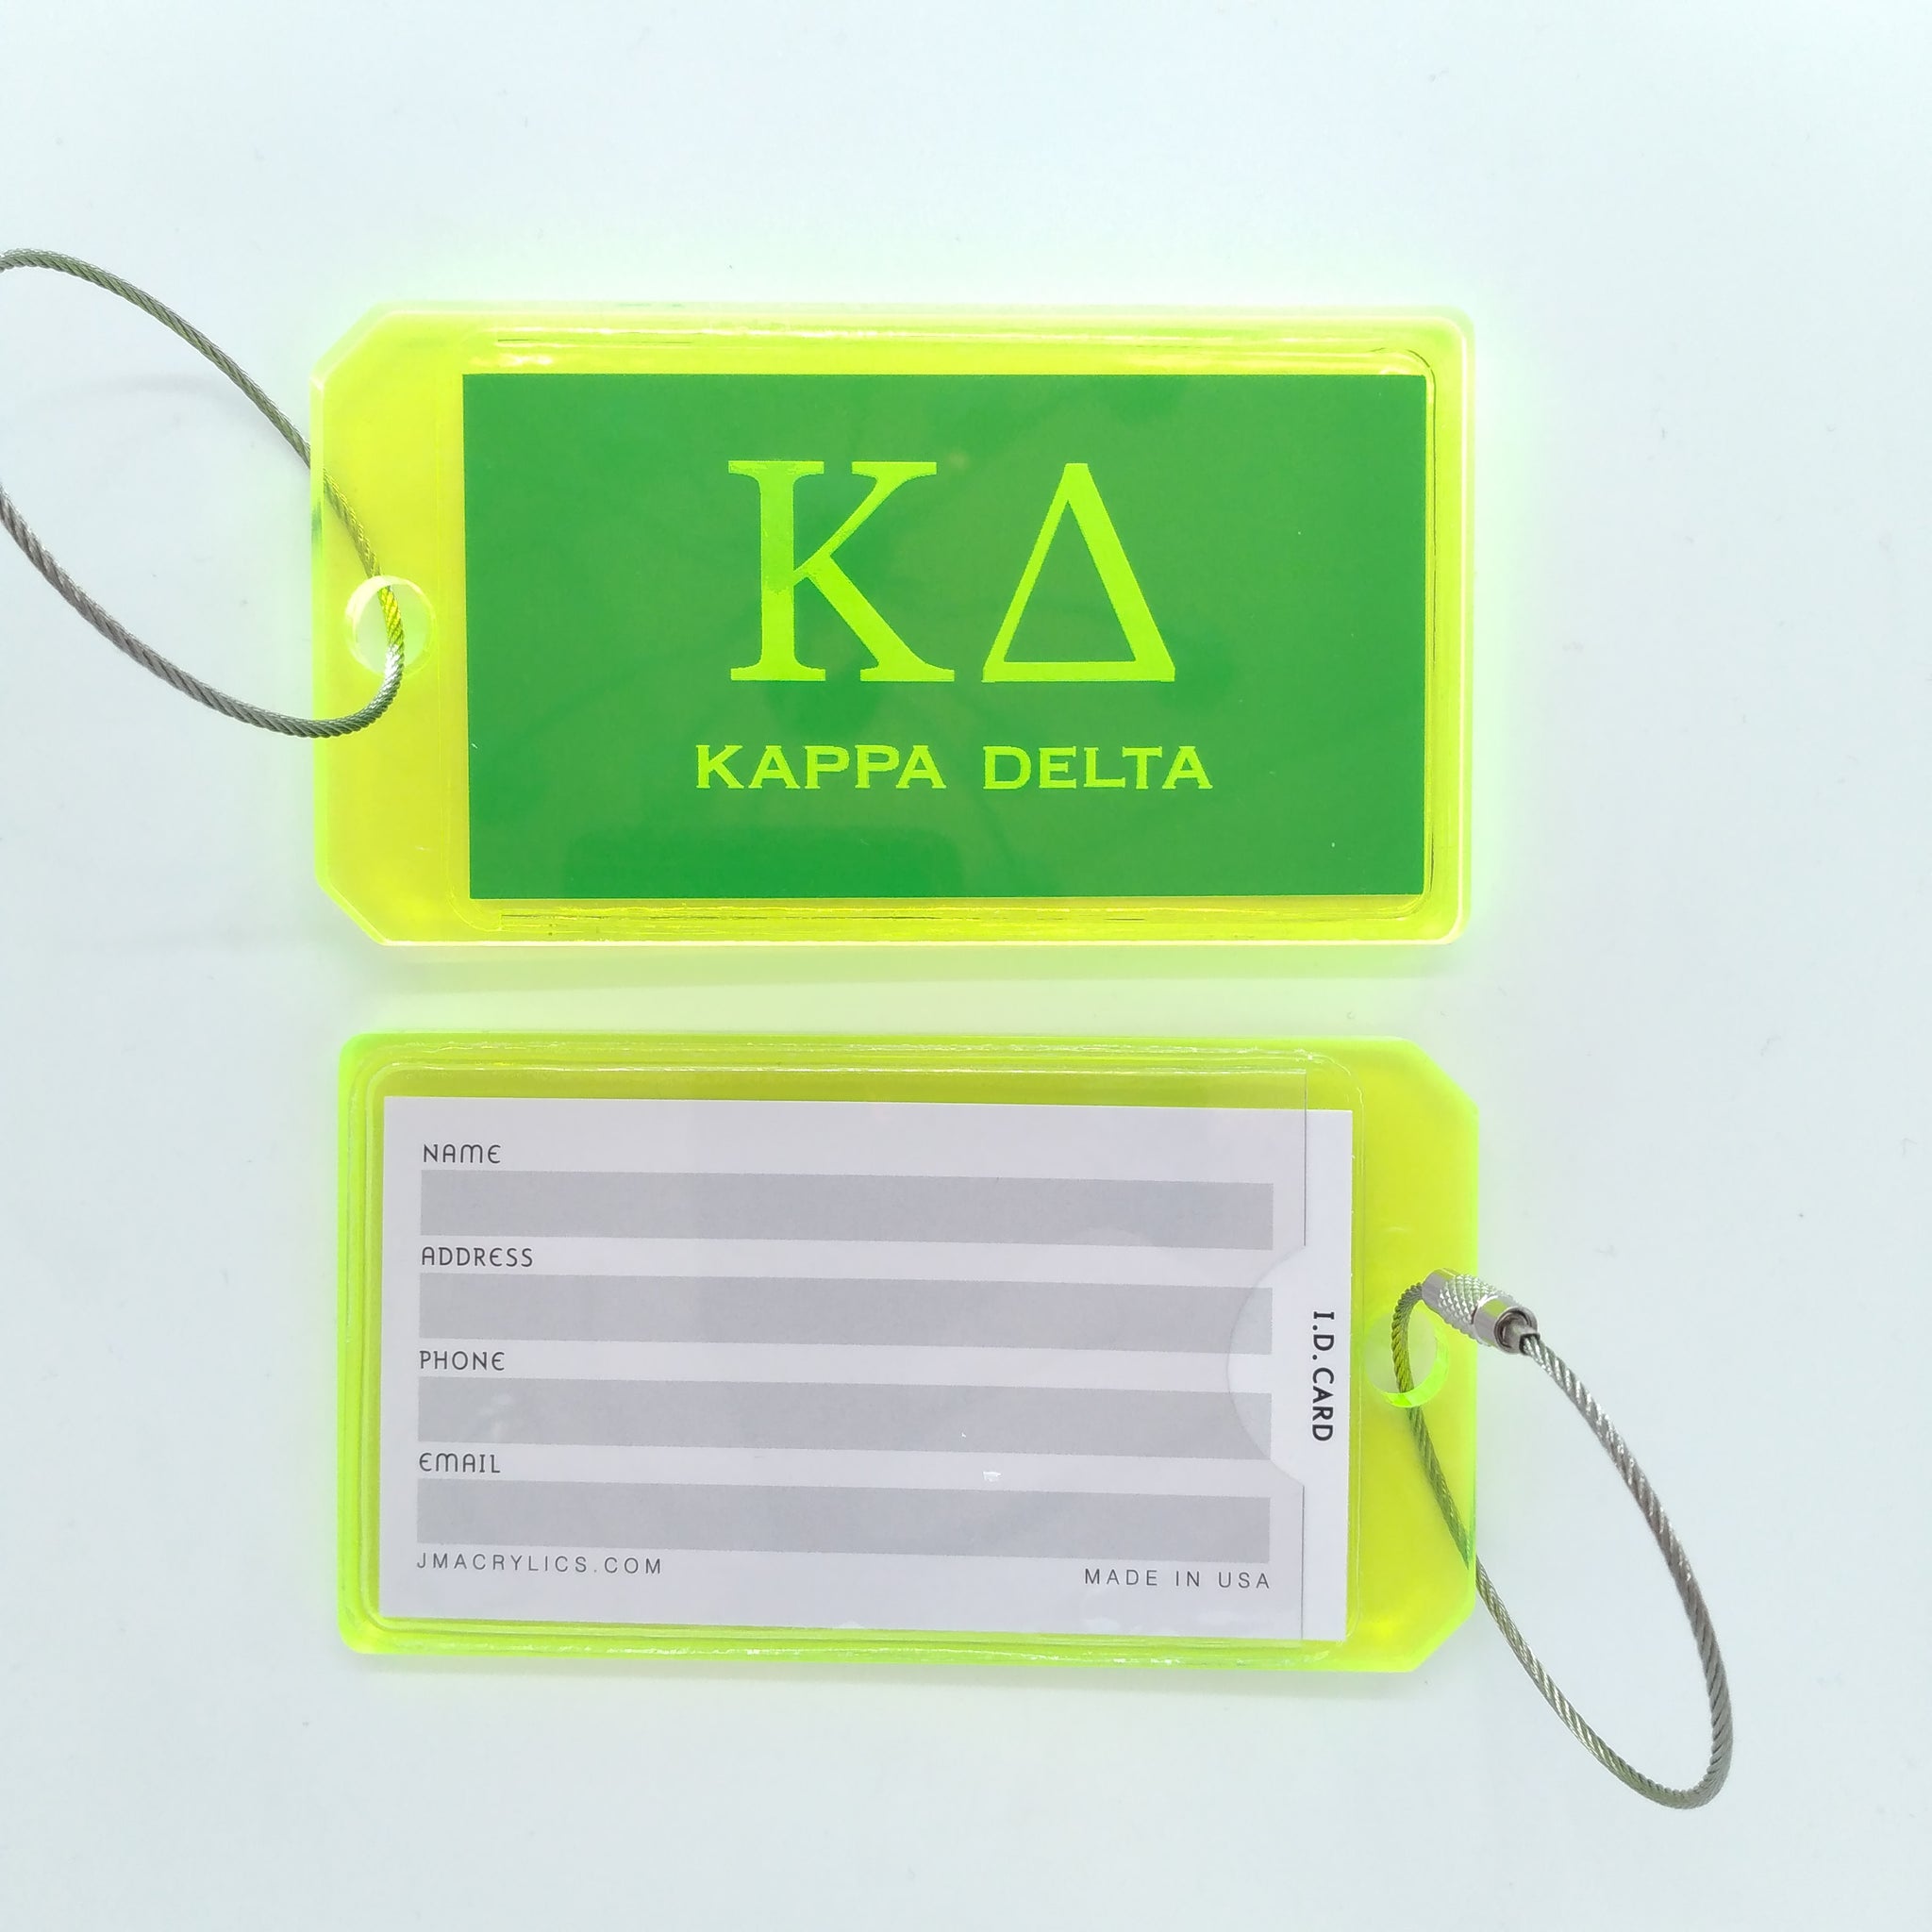 Acrylic Luggage Tag - Kappa Delta